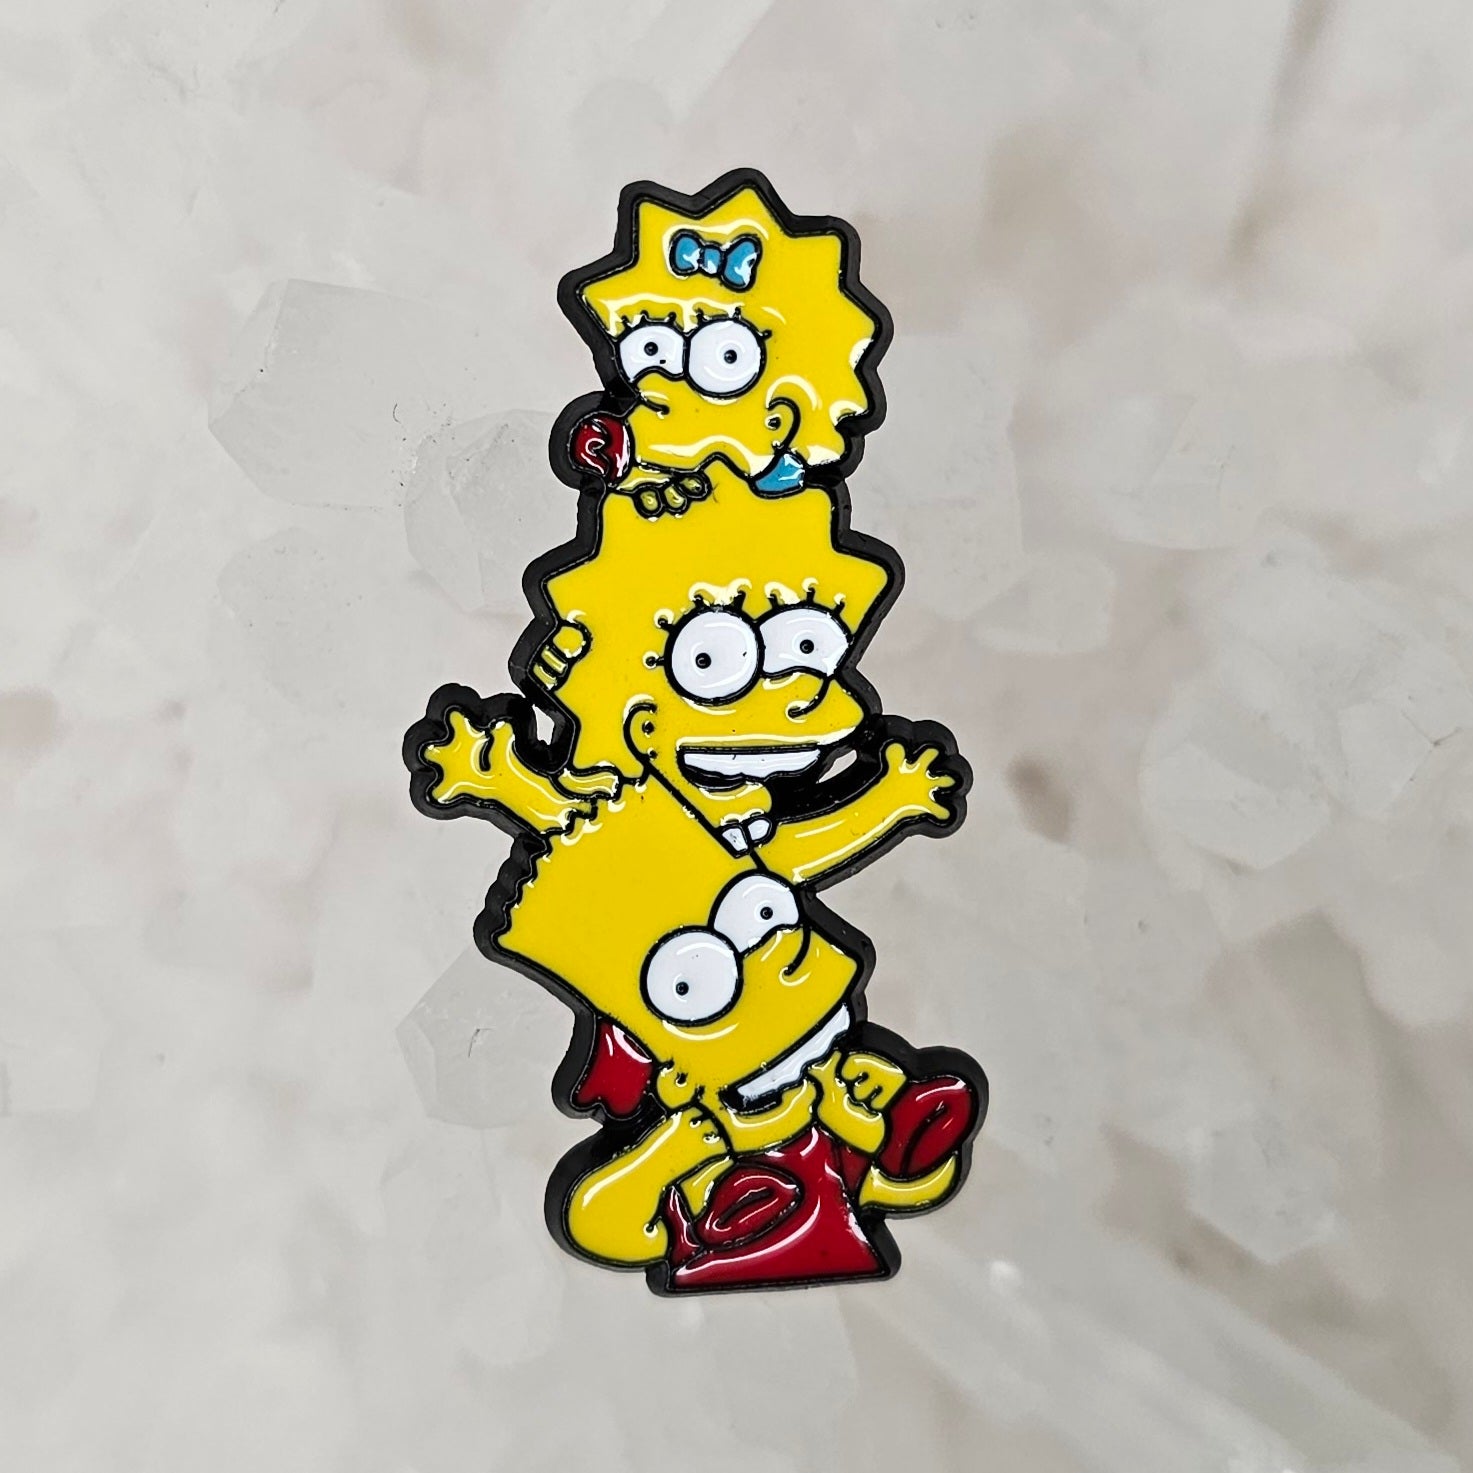 Bart Lisa Maggie Simpson 90s Cartoon Tv Enamel Pins Hat Pins Lapel Pin Brooch Badge Festival Pin